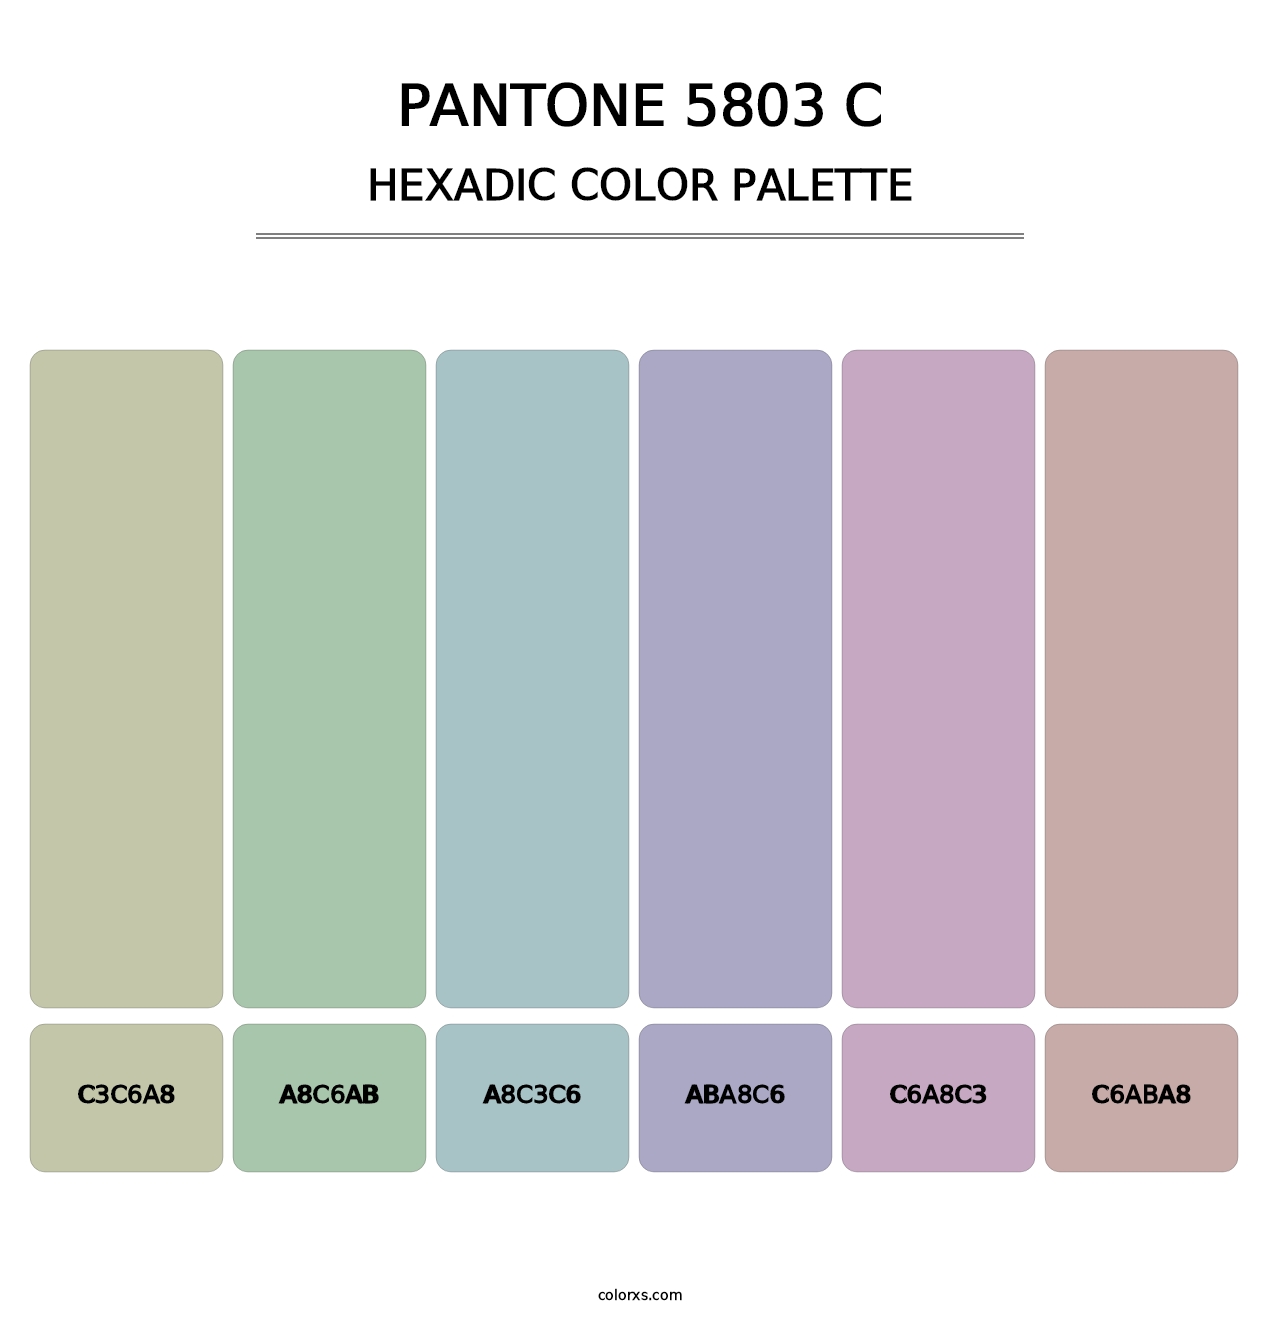 PANTONE 5803 C - Hexadic Color Palette